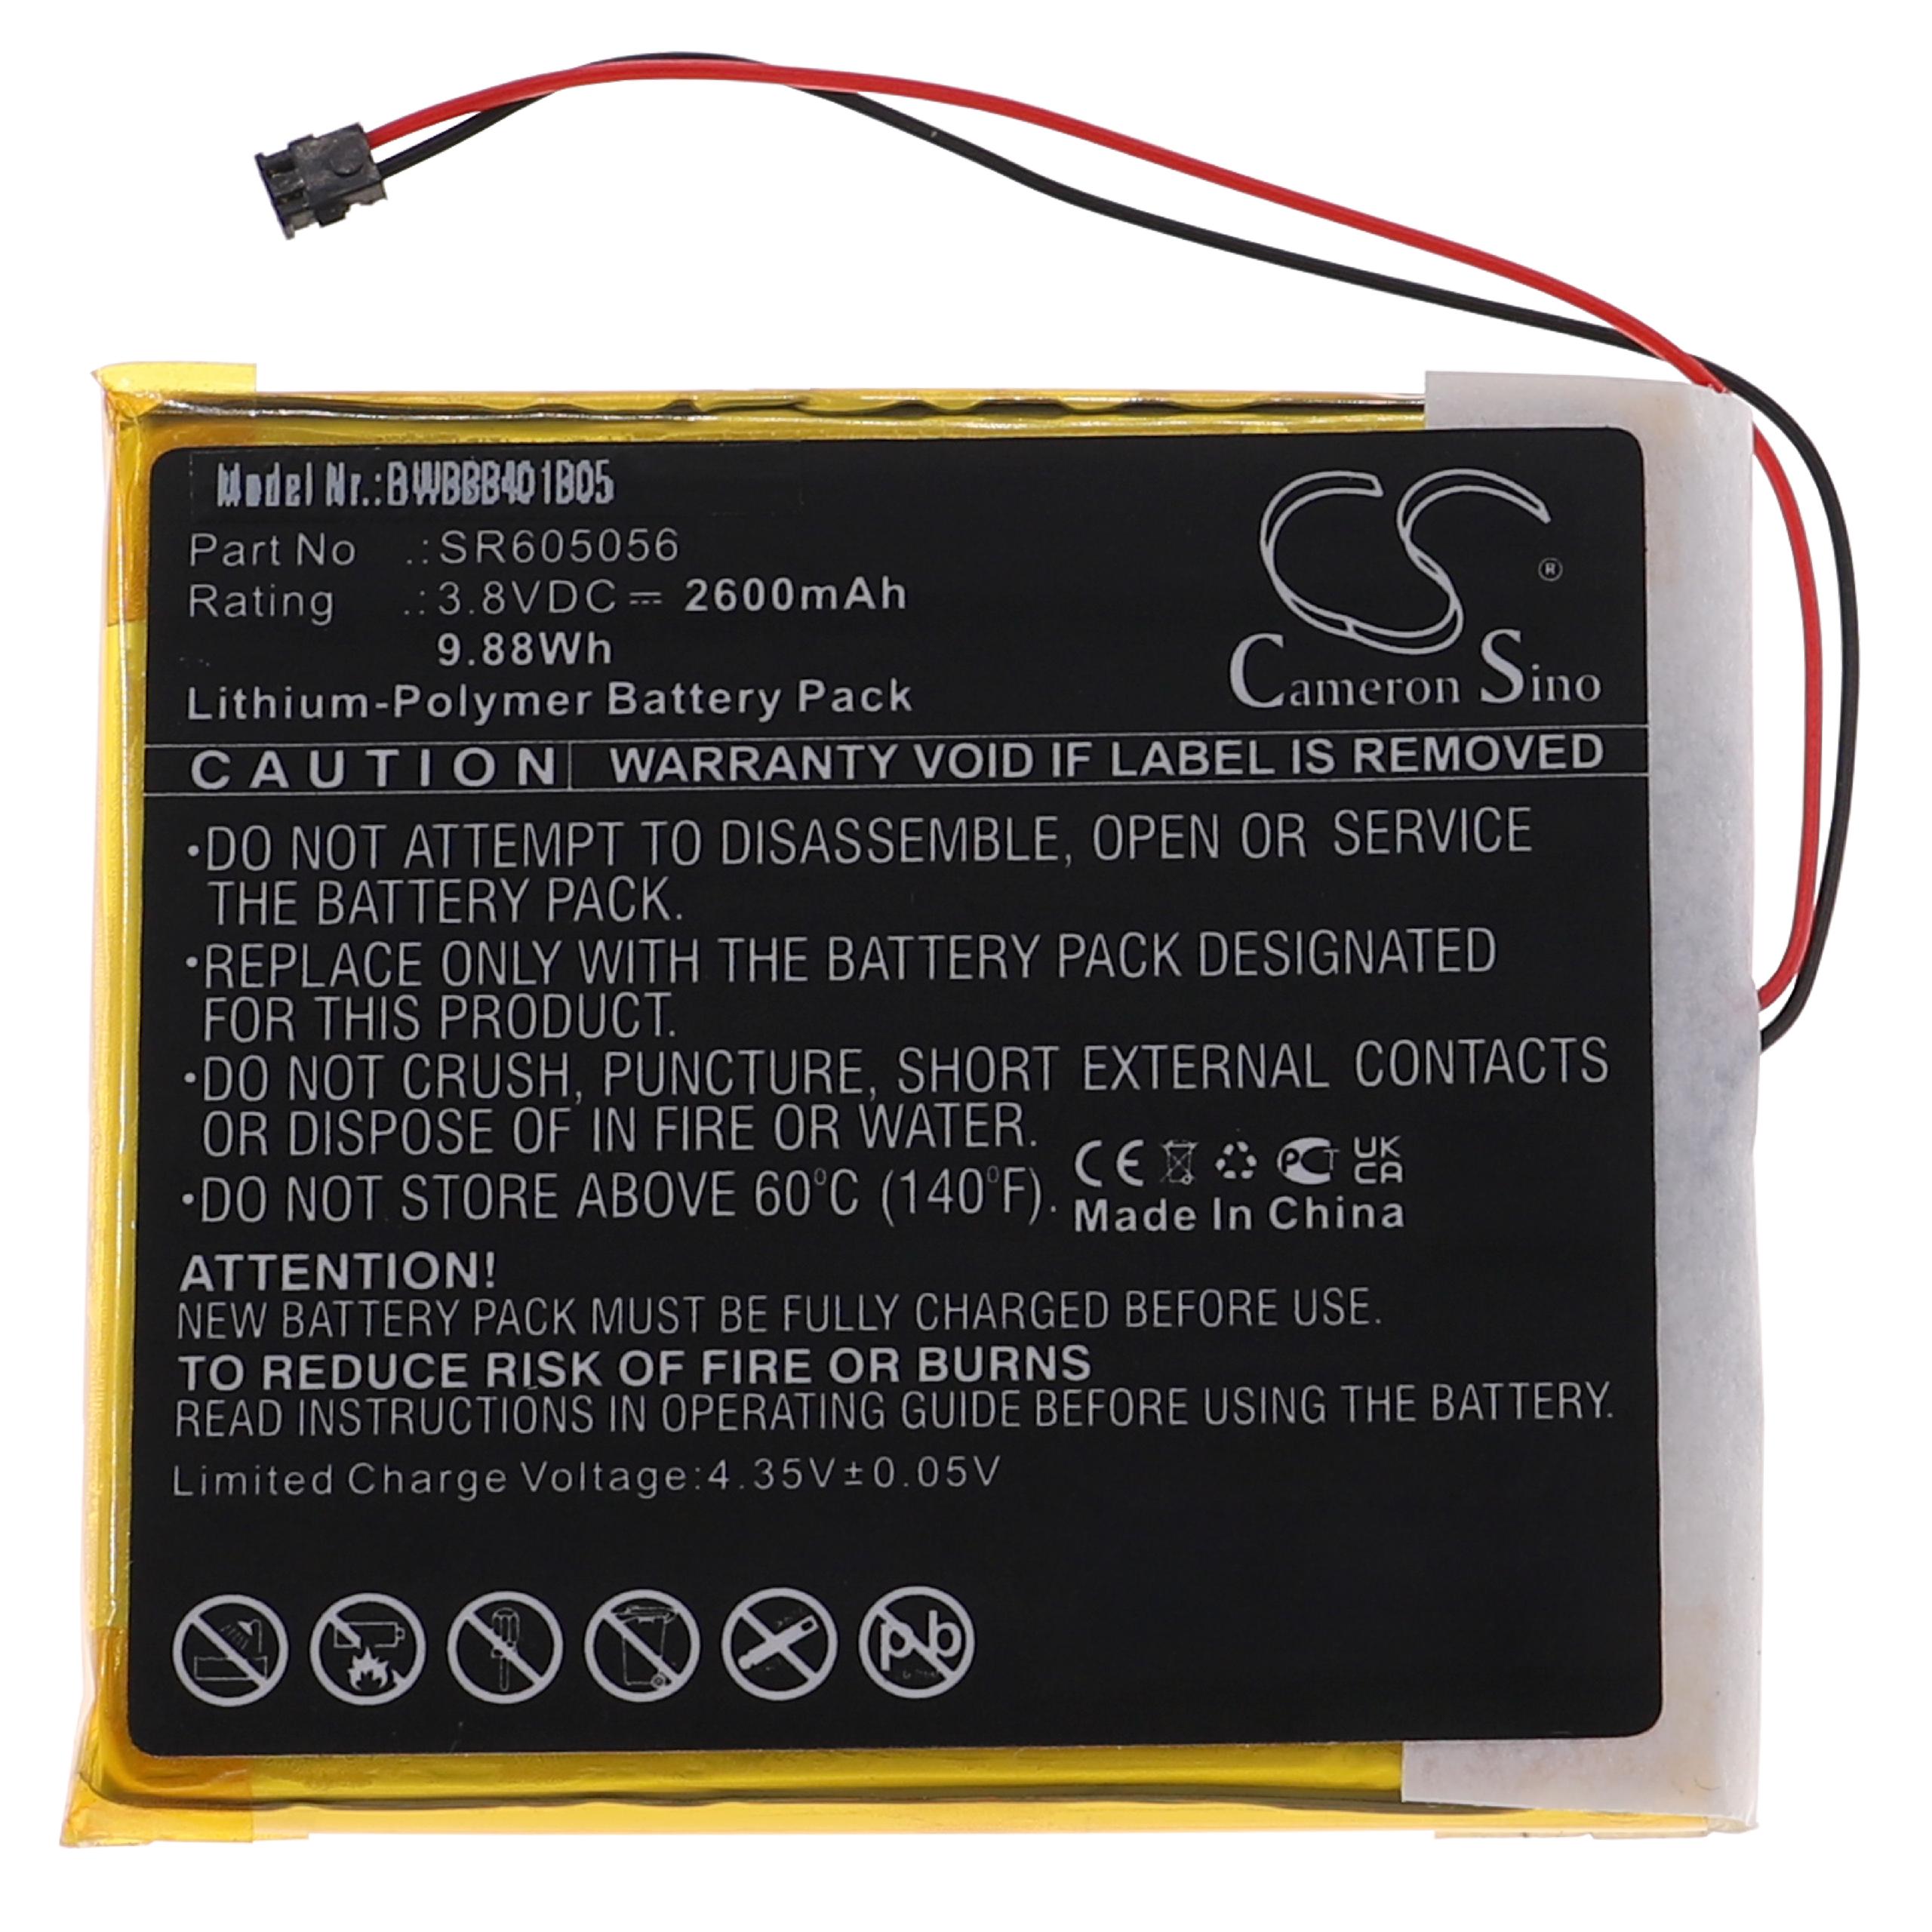 Akumulator do odtwarzacza MP3 zamiennik Astell & Kern SR605056 - 2600 mAh 3,8 V LiPo